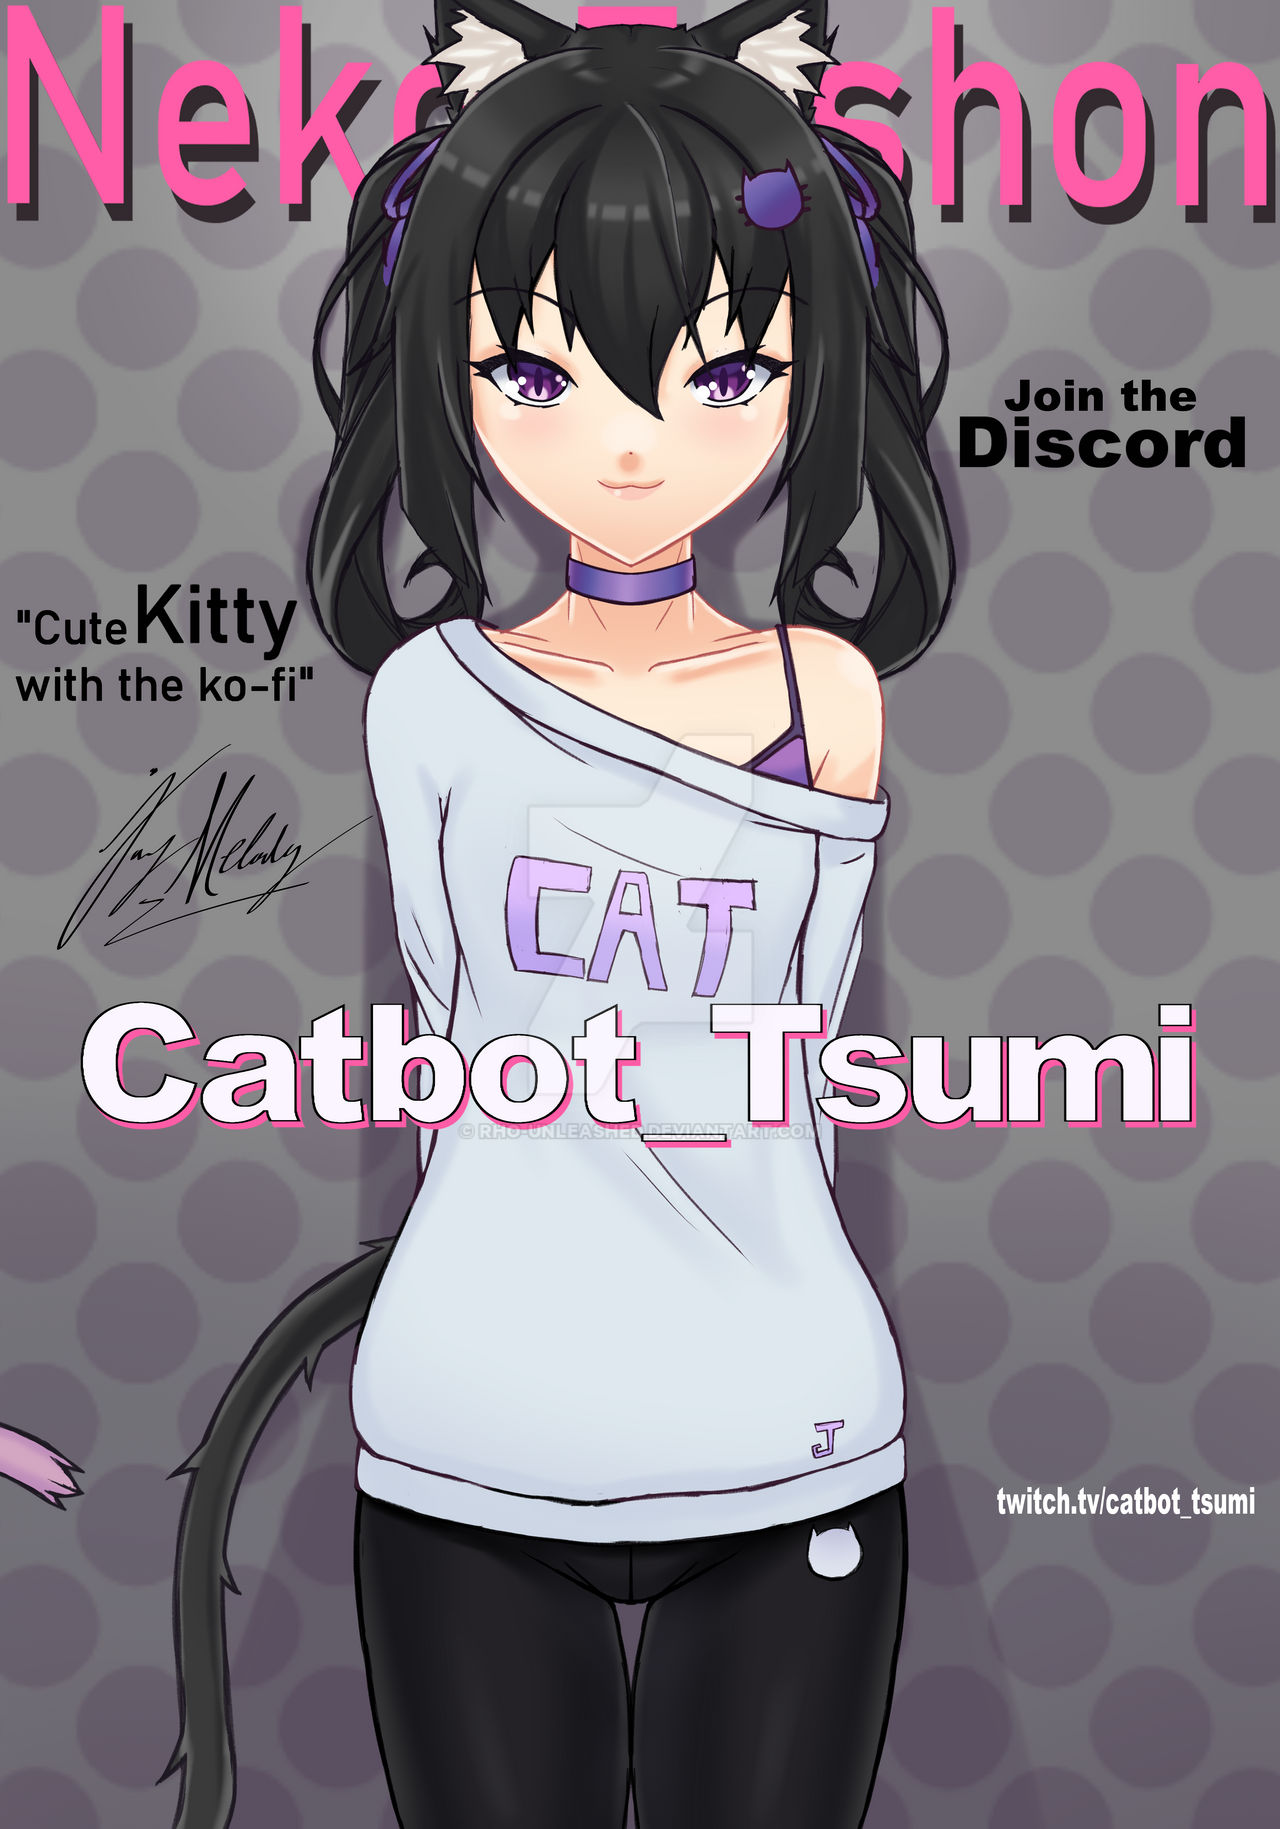 Catbot_Tsumi - Twitch